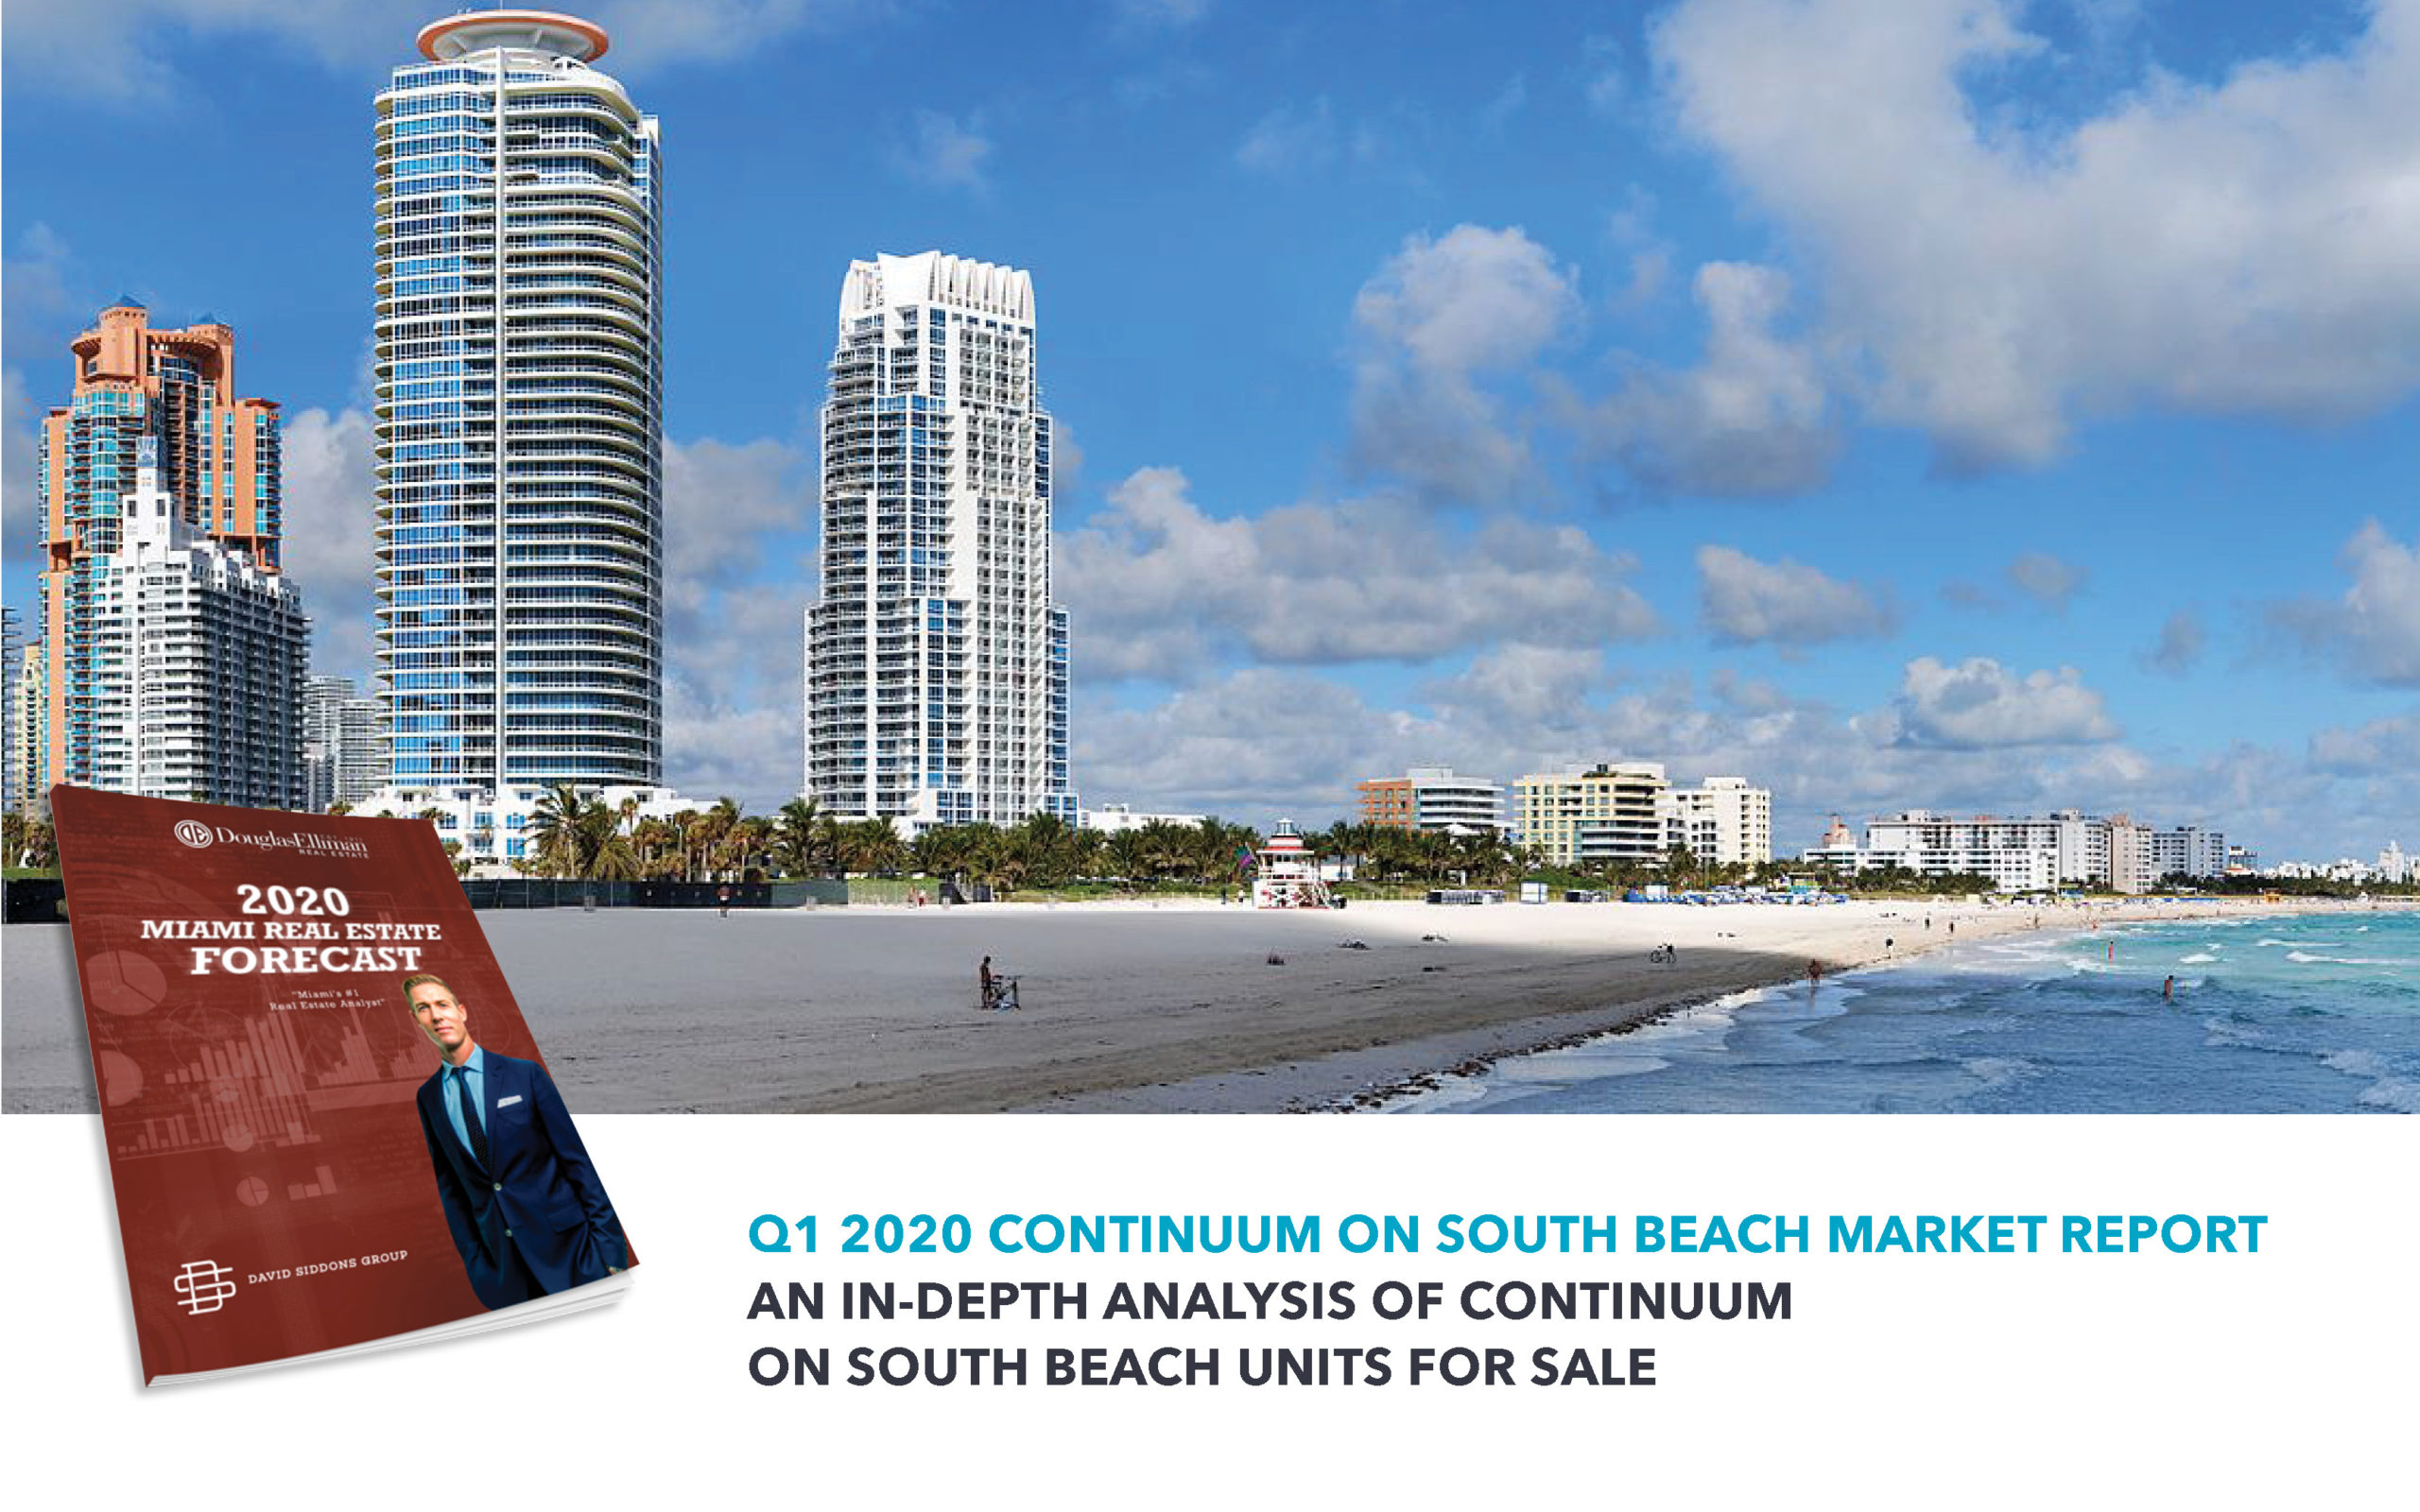 Q1 2020 Continuum on South Beach Market Report